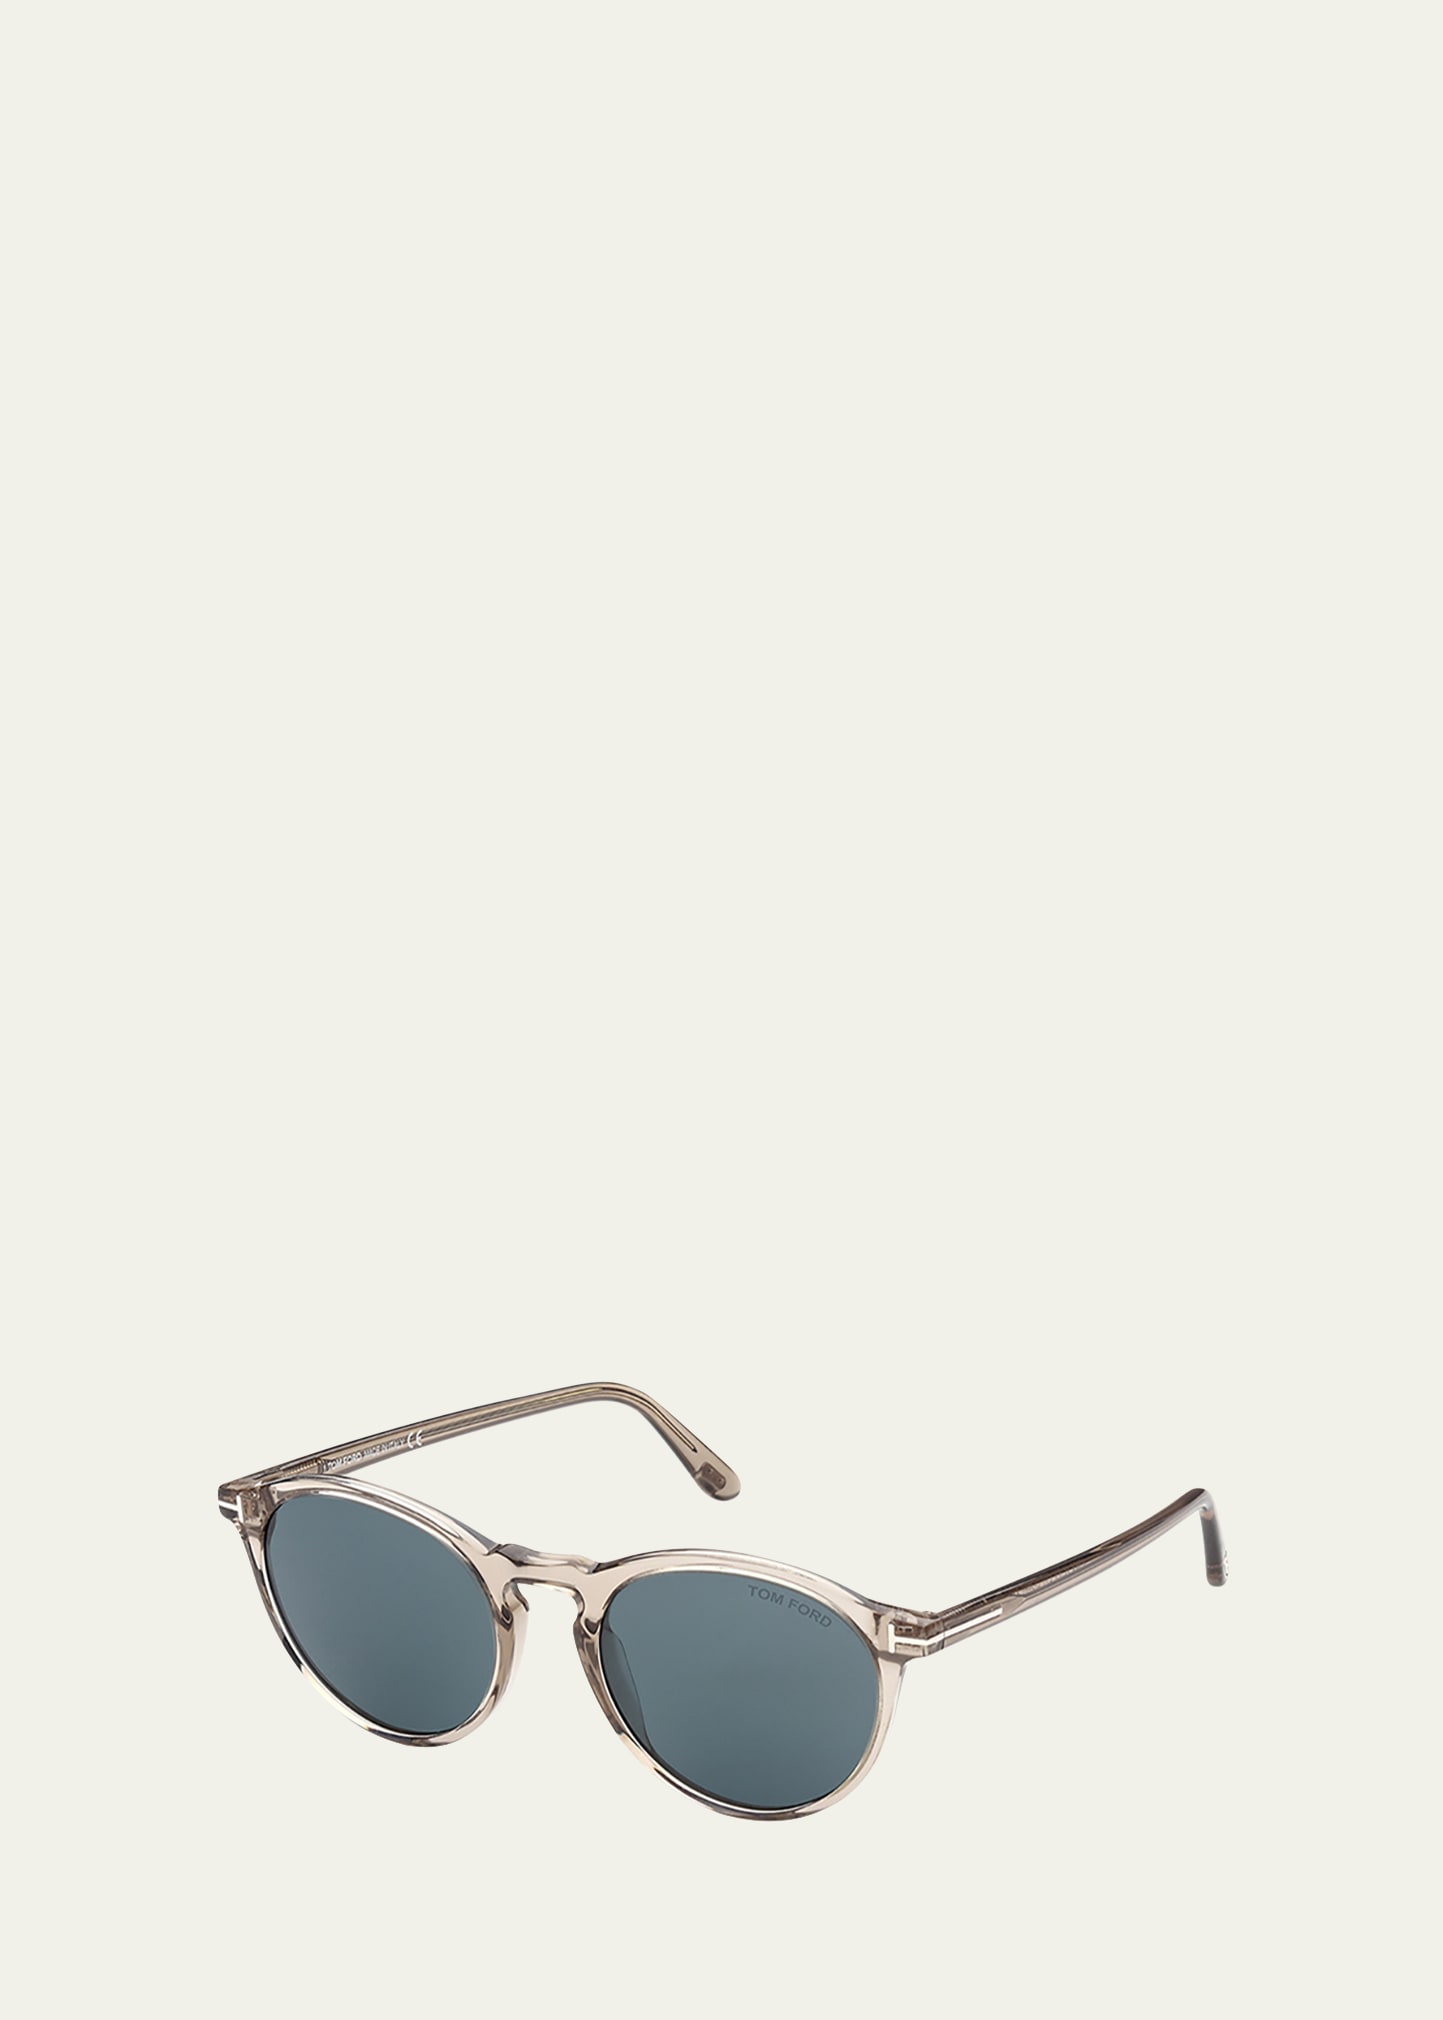 Tom Ford Round Acetate Sunglasses In Beige / Blue